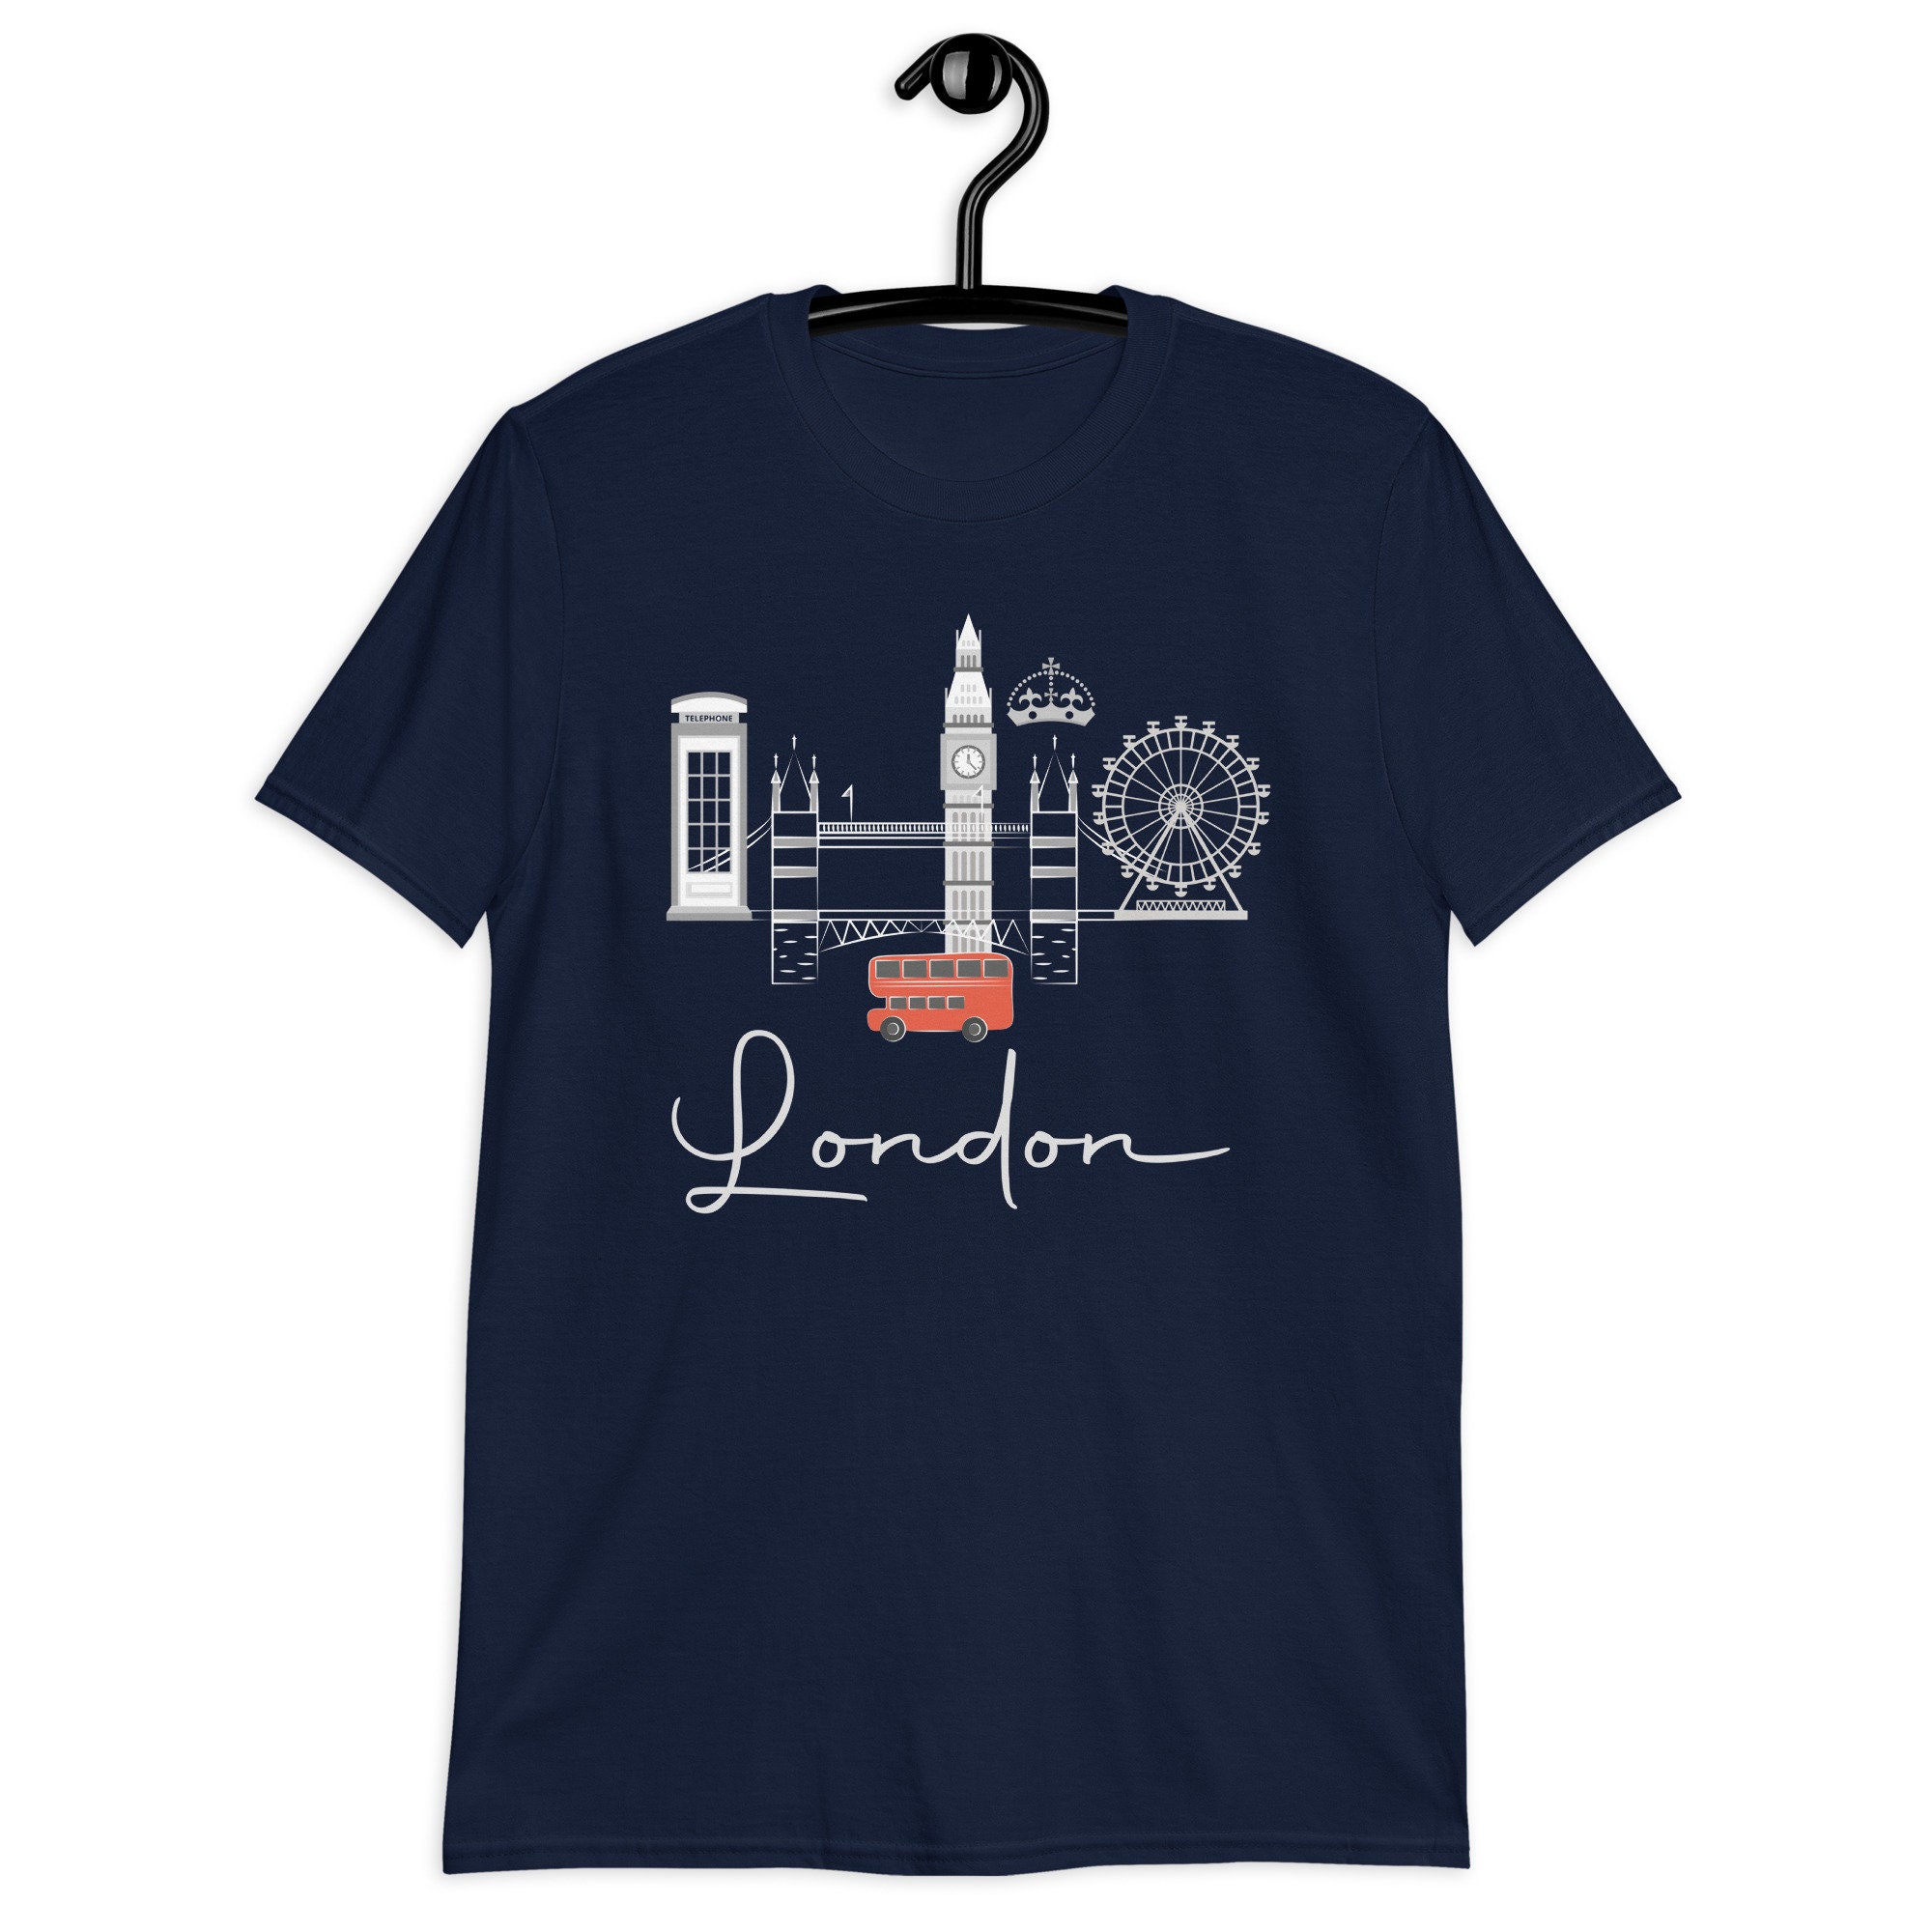 London Shirts England Landmarks T-shirt United Kingdom - Etsy